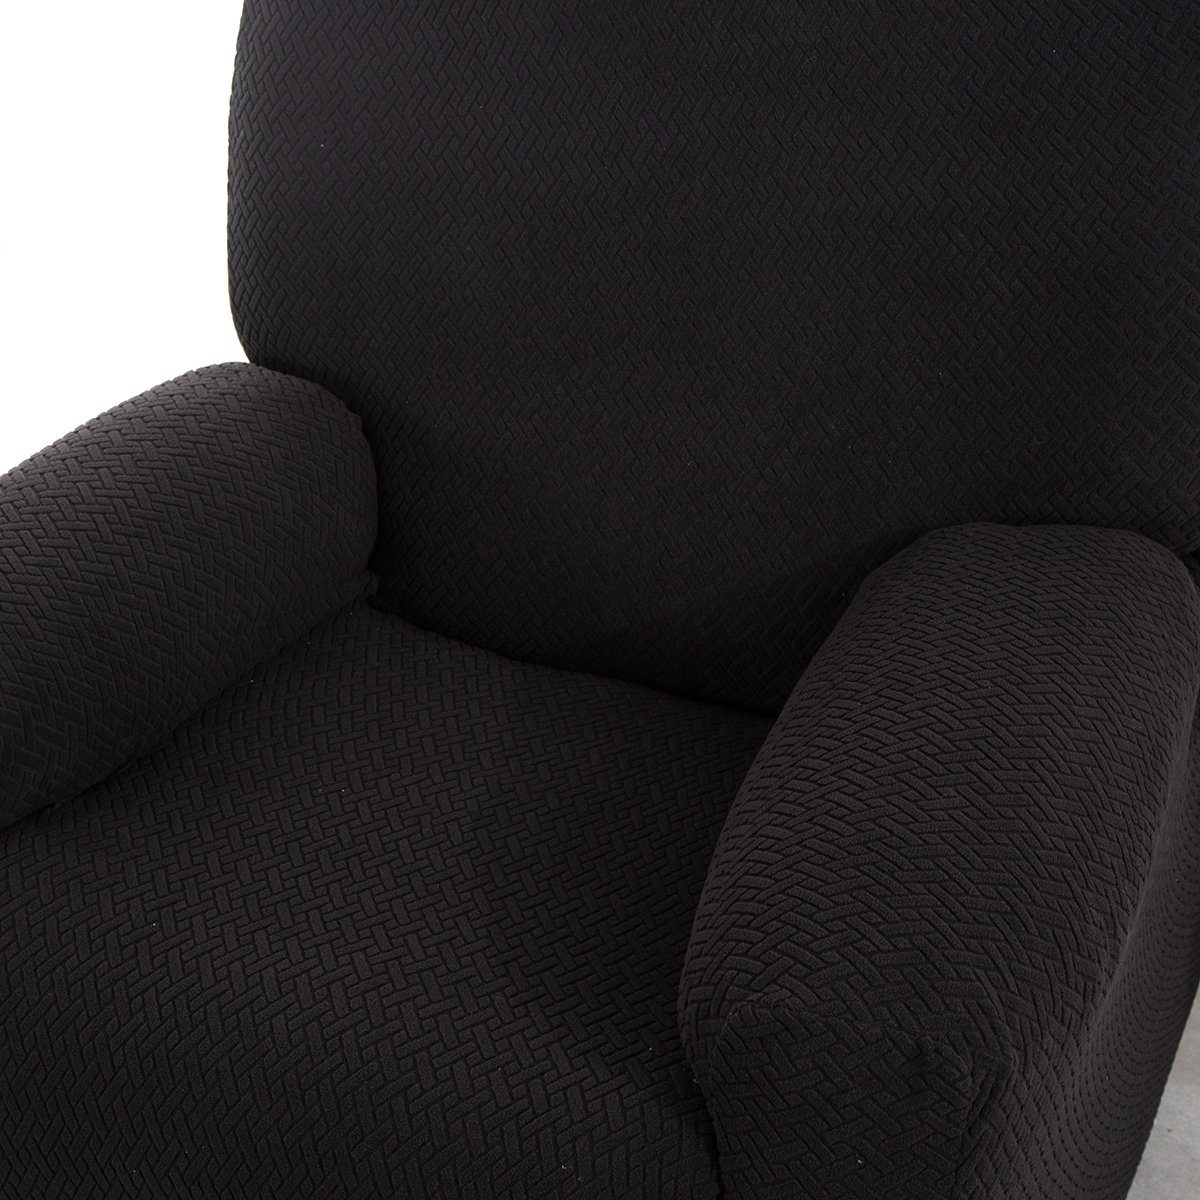 Schwarz Rosnek, Komplett mit Liege Sessel, Relaxsessel Sesselbezug Strukturoptik für Stretchhusse, Sesselhusse